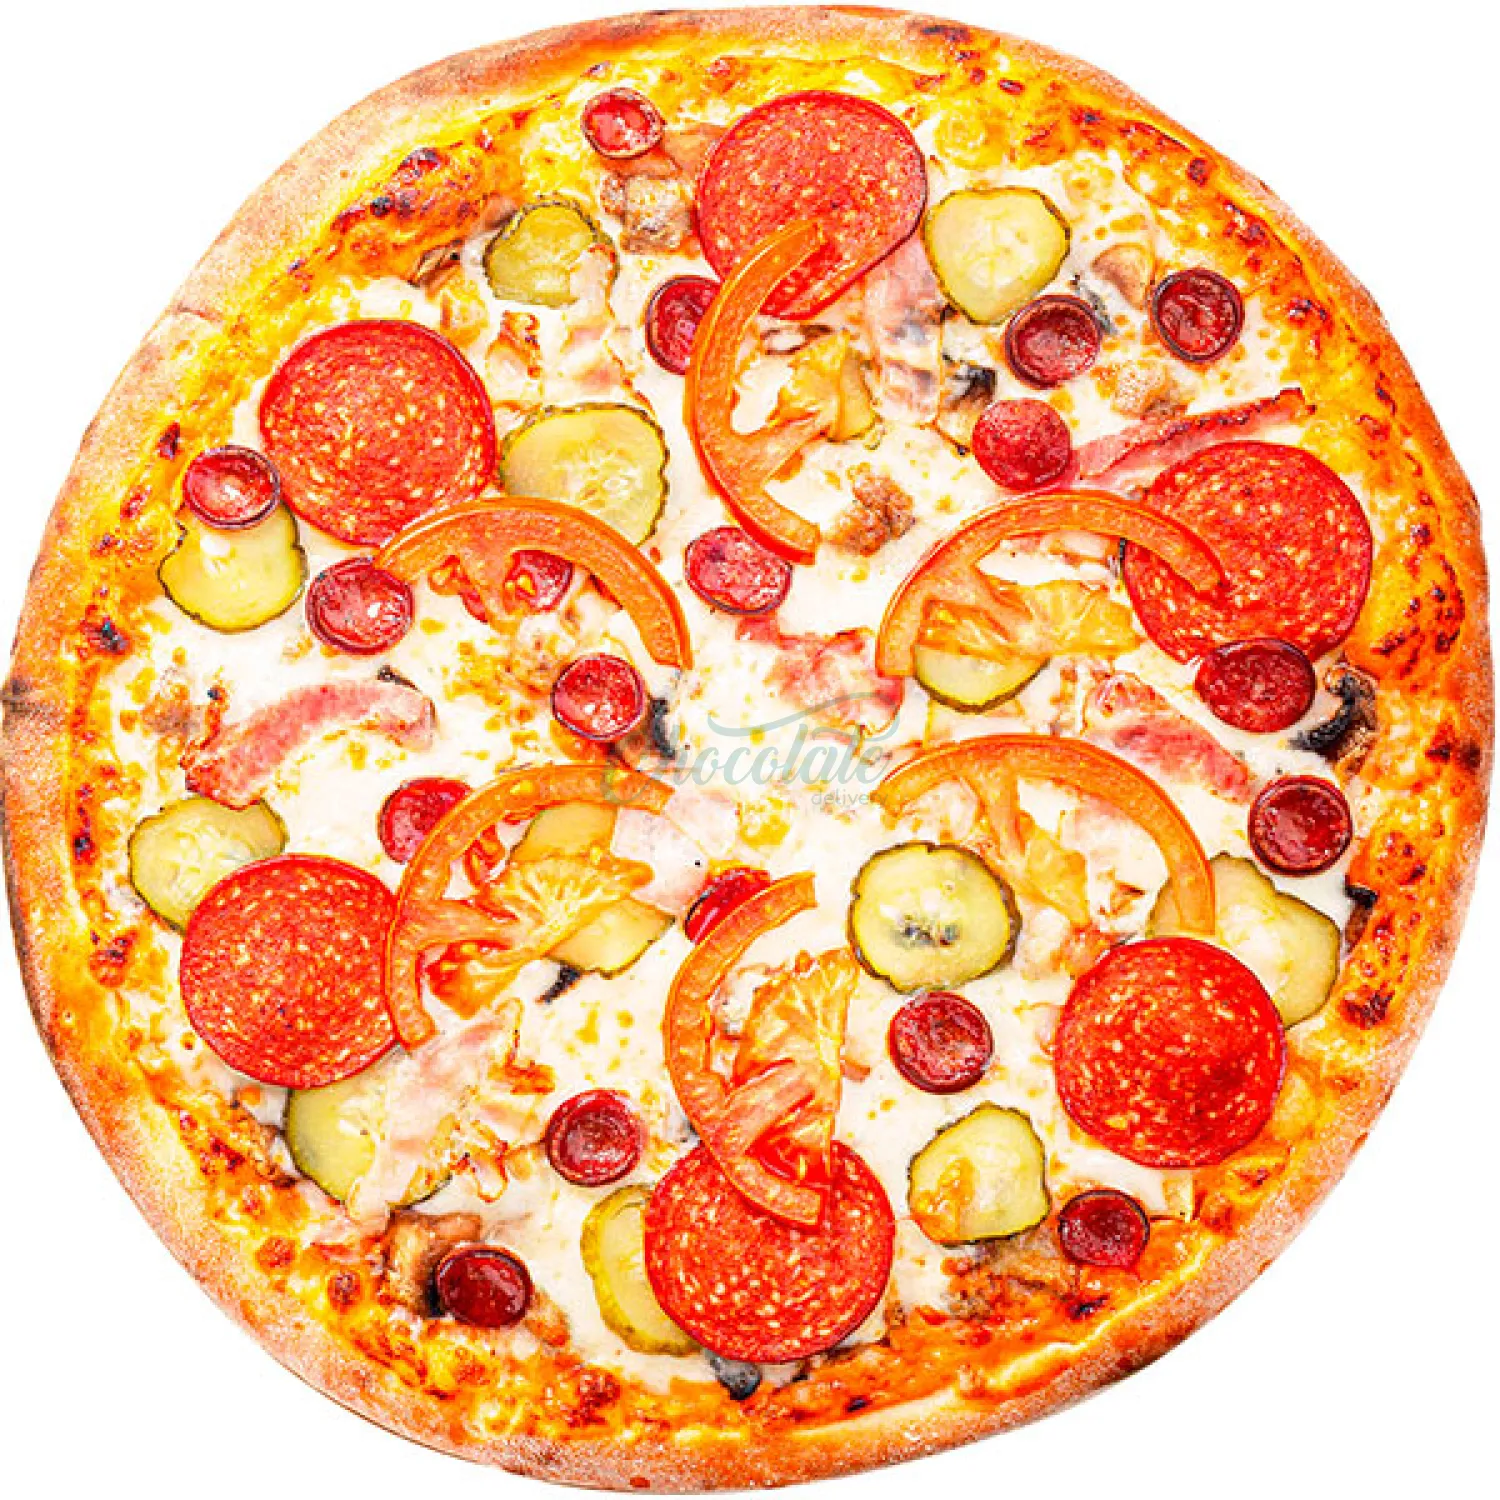 сколько стоит 1 пицца пепперони фото 111